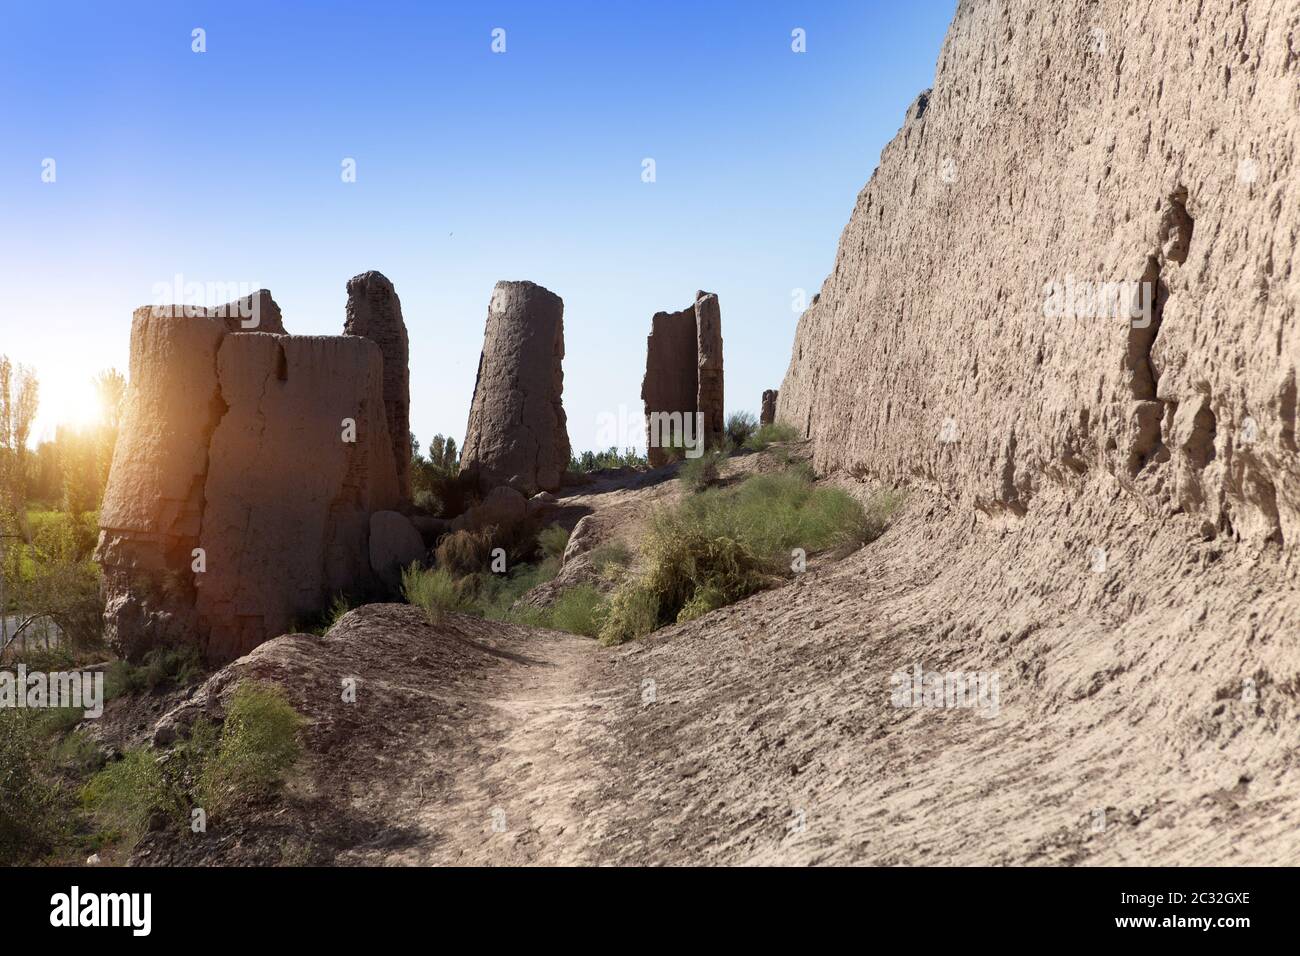 ancient fortress of Khorezm on the Kyzylkum Desert, Uzbekistan Stock Photo